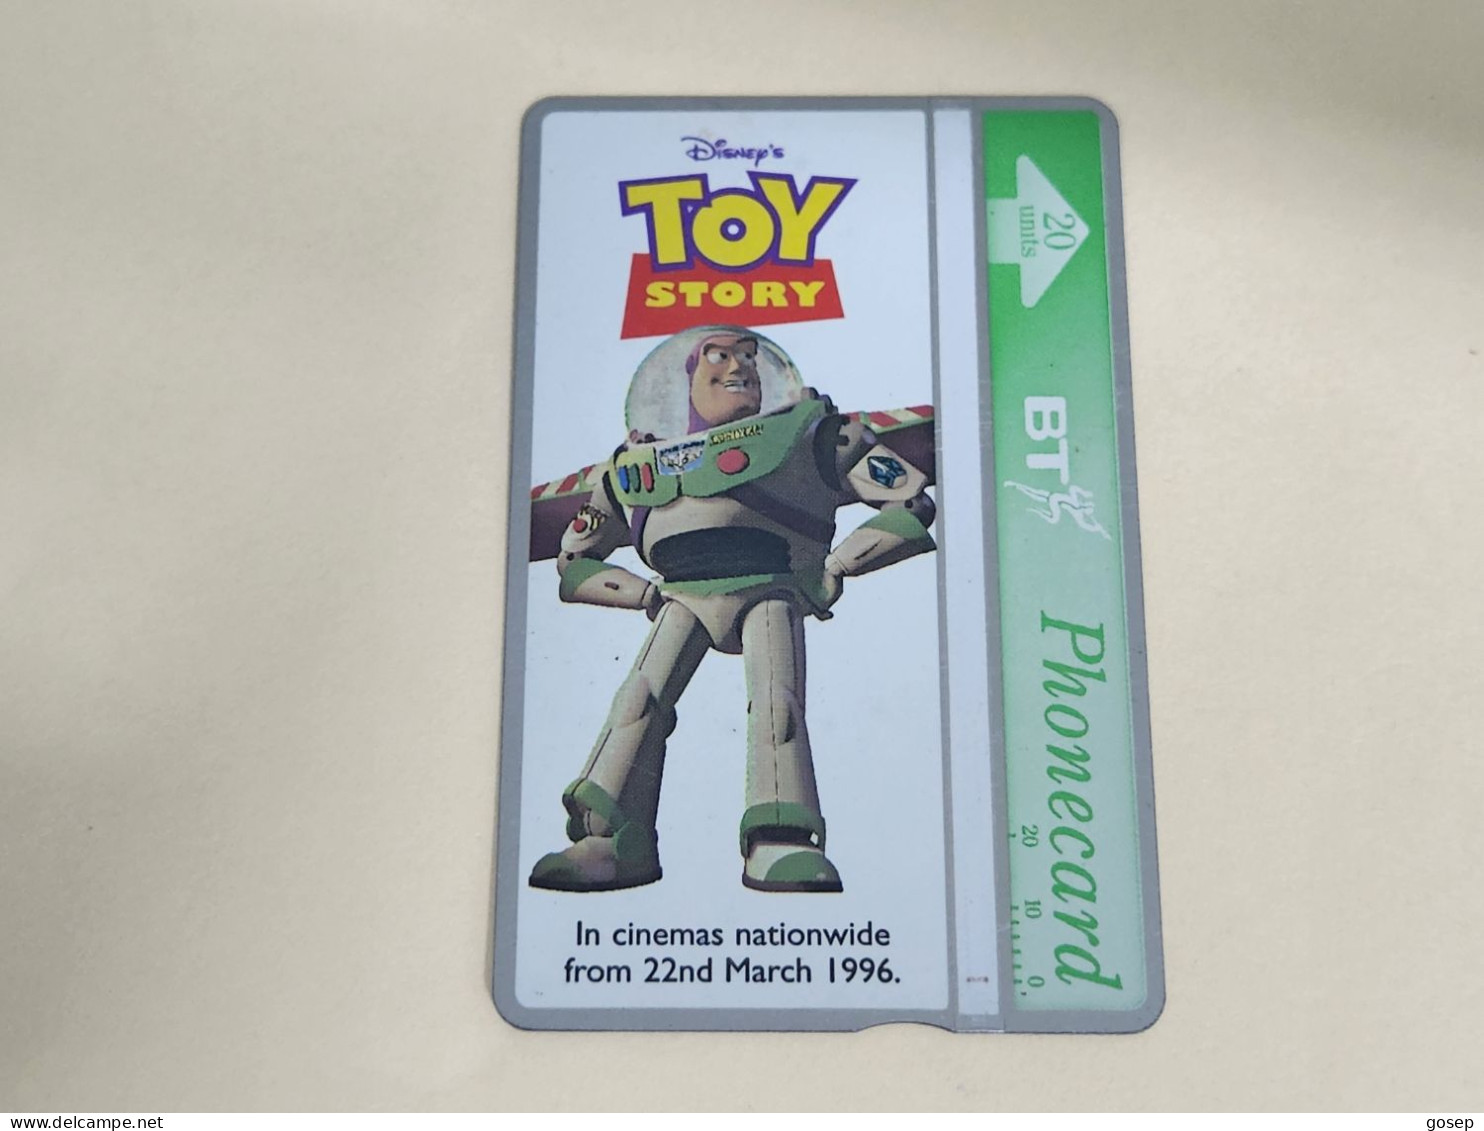 United Kingdom-(BTA150)Disney's Toy-3 BUZZ-(256)(20units)(623B37095)price Cataloge 3.00£ Used+1card Prepiad Free - BT Advertising Issues